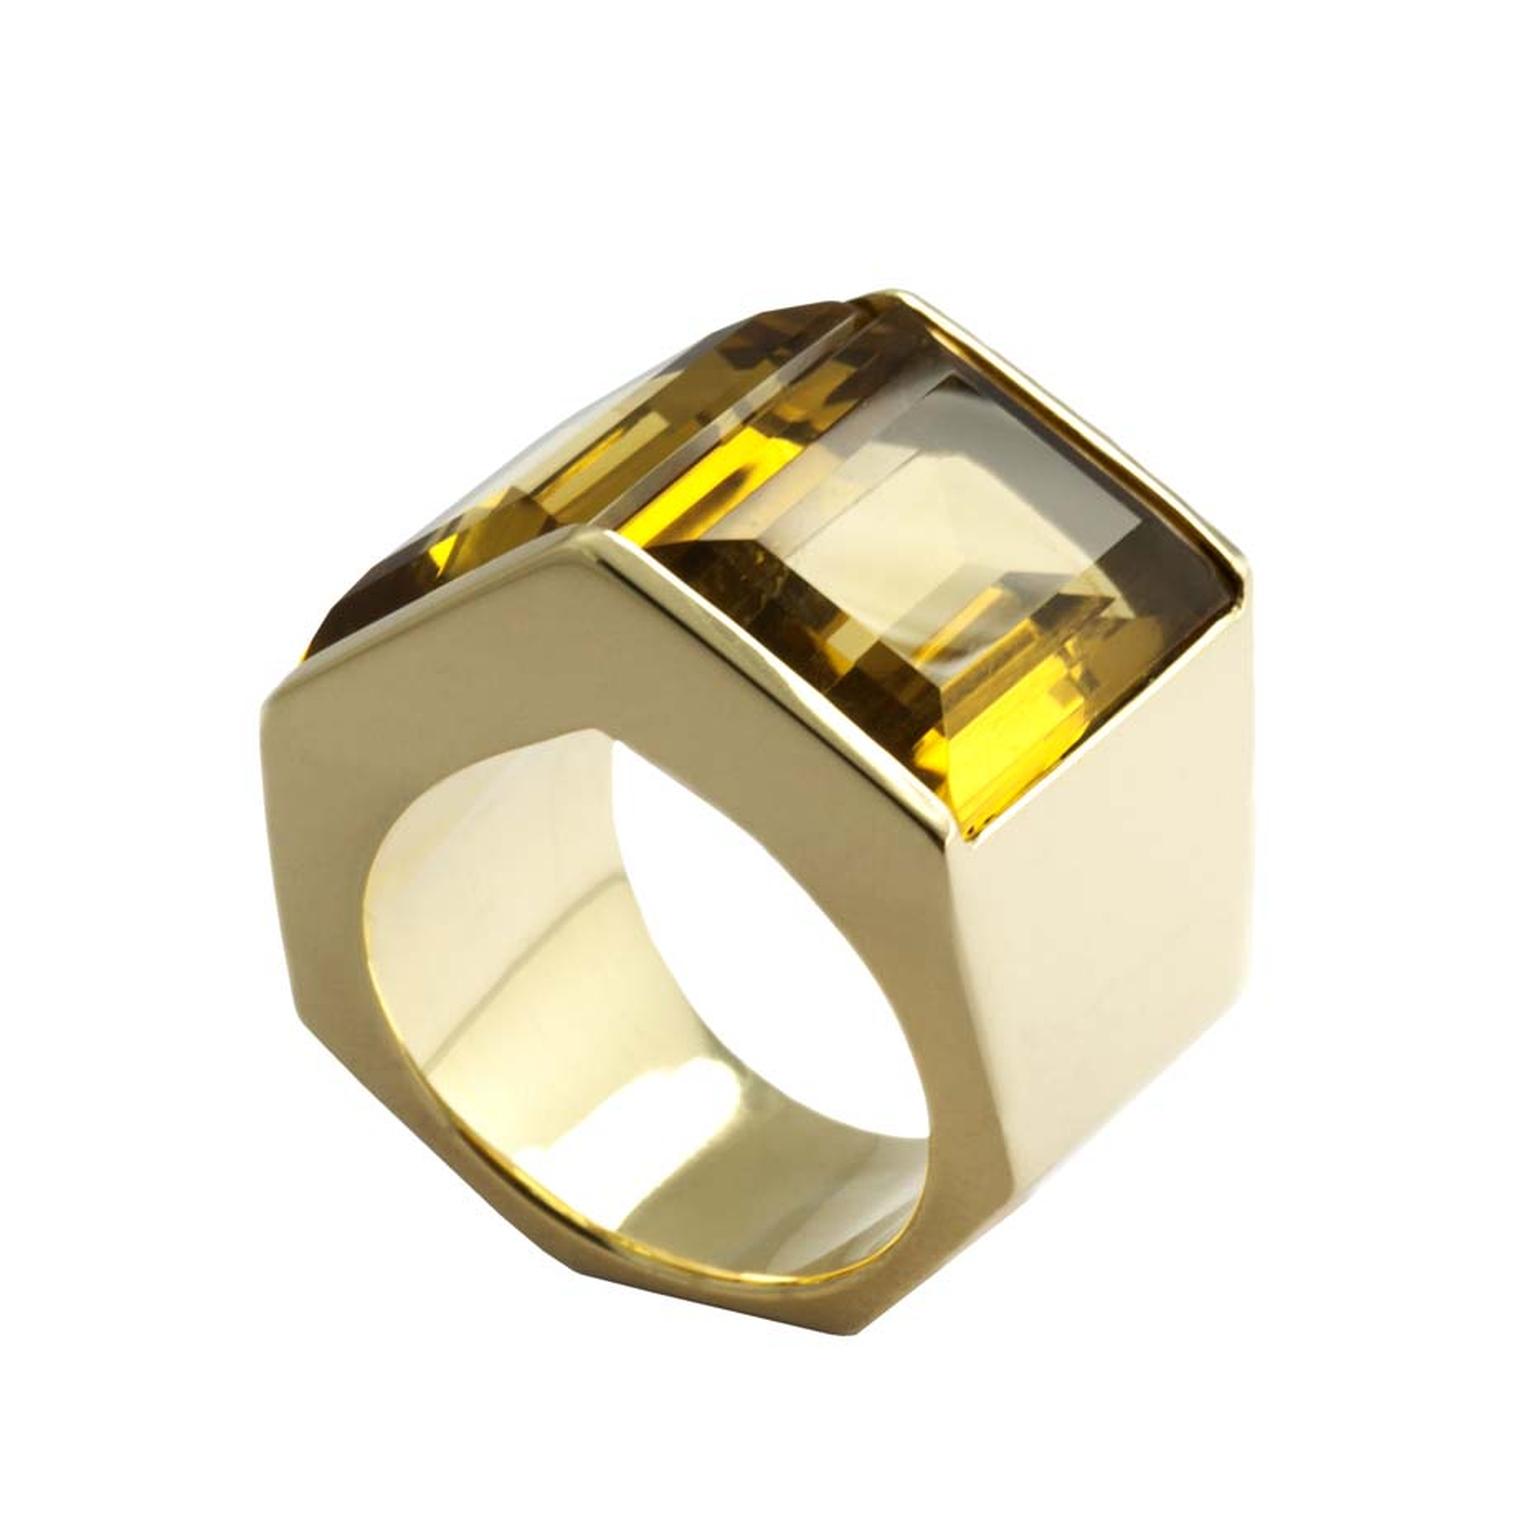 Kattri Polygon Tall yellow gold and citrine ring (£4,550).